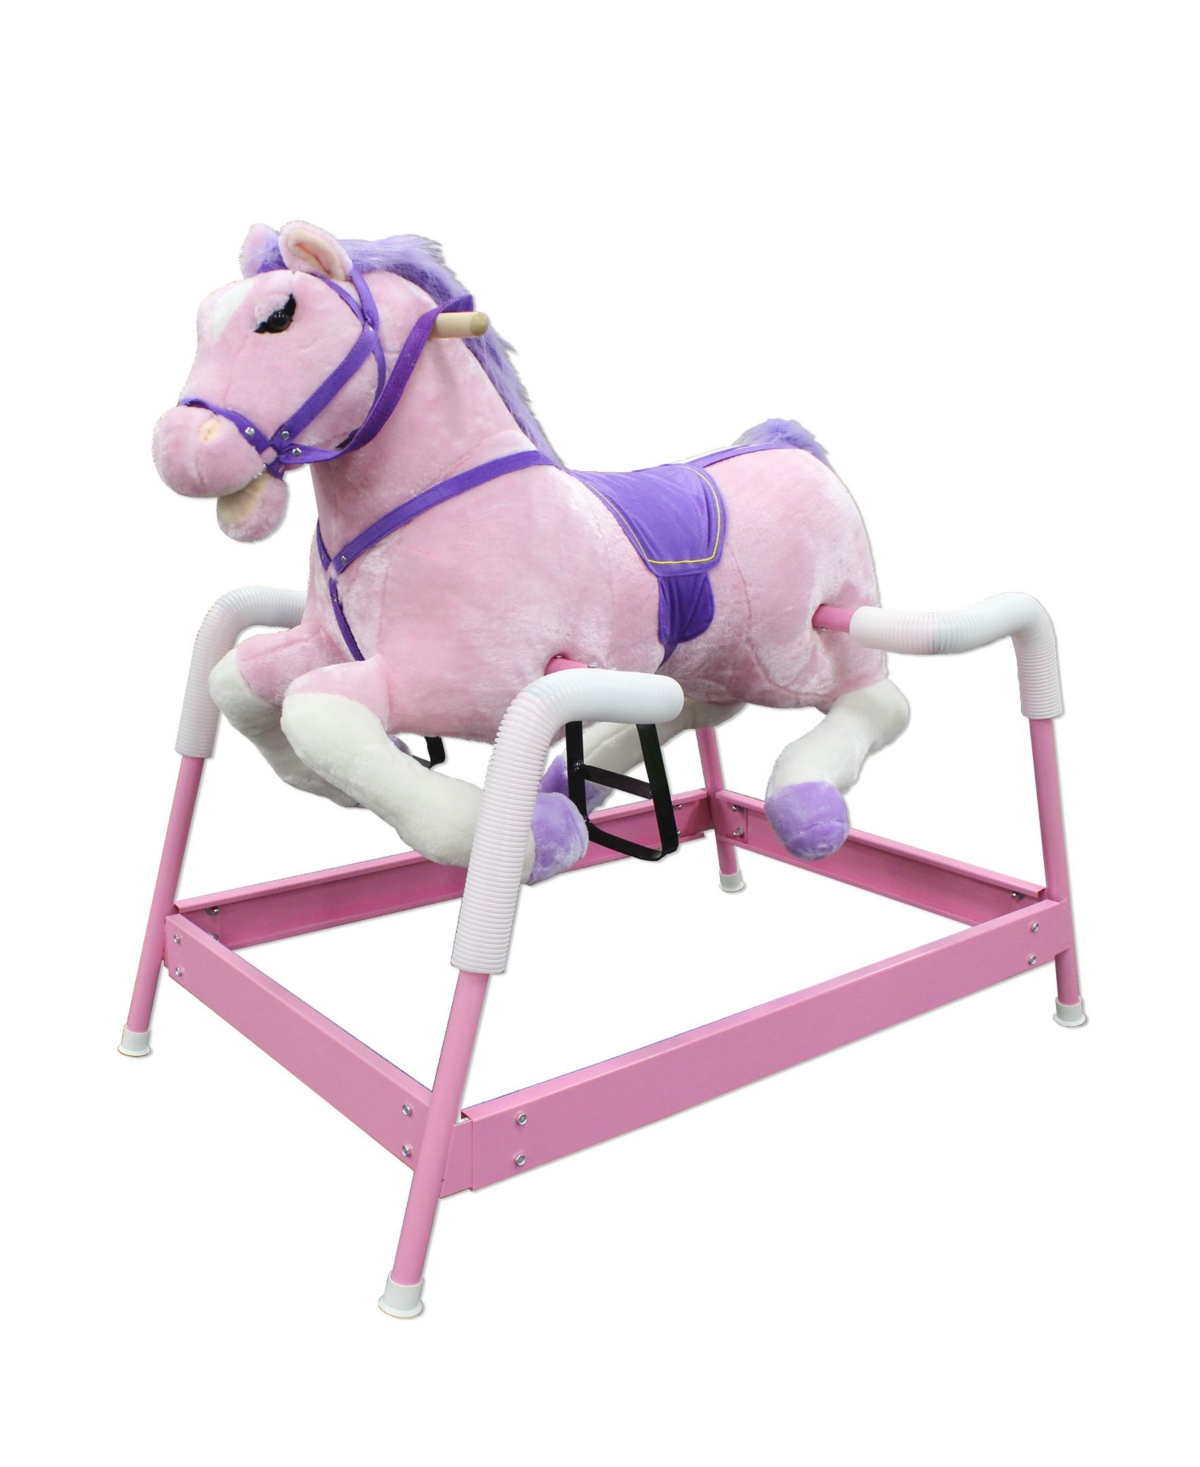 Ponyland Kids' Spring Horse With Sound In Pink